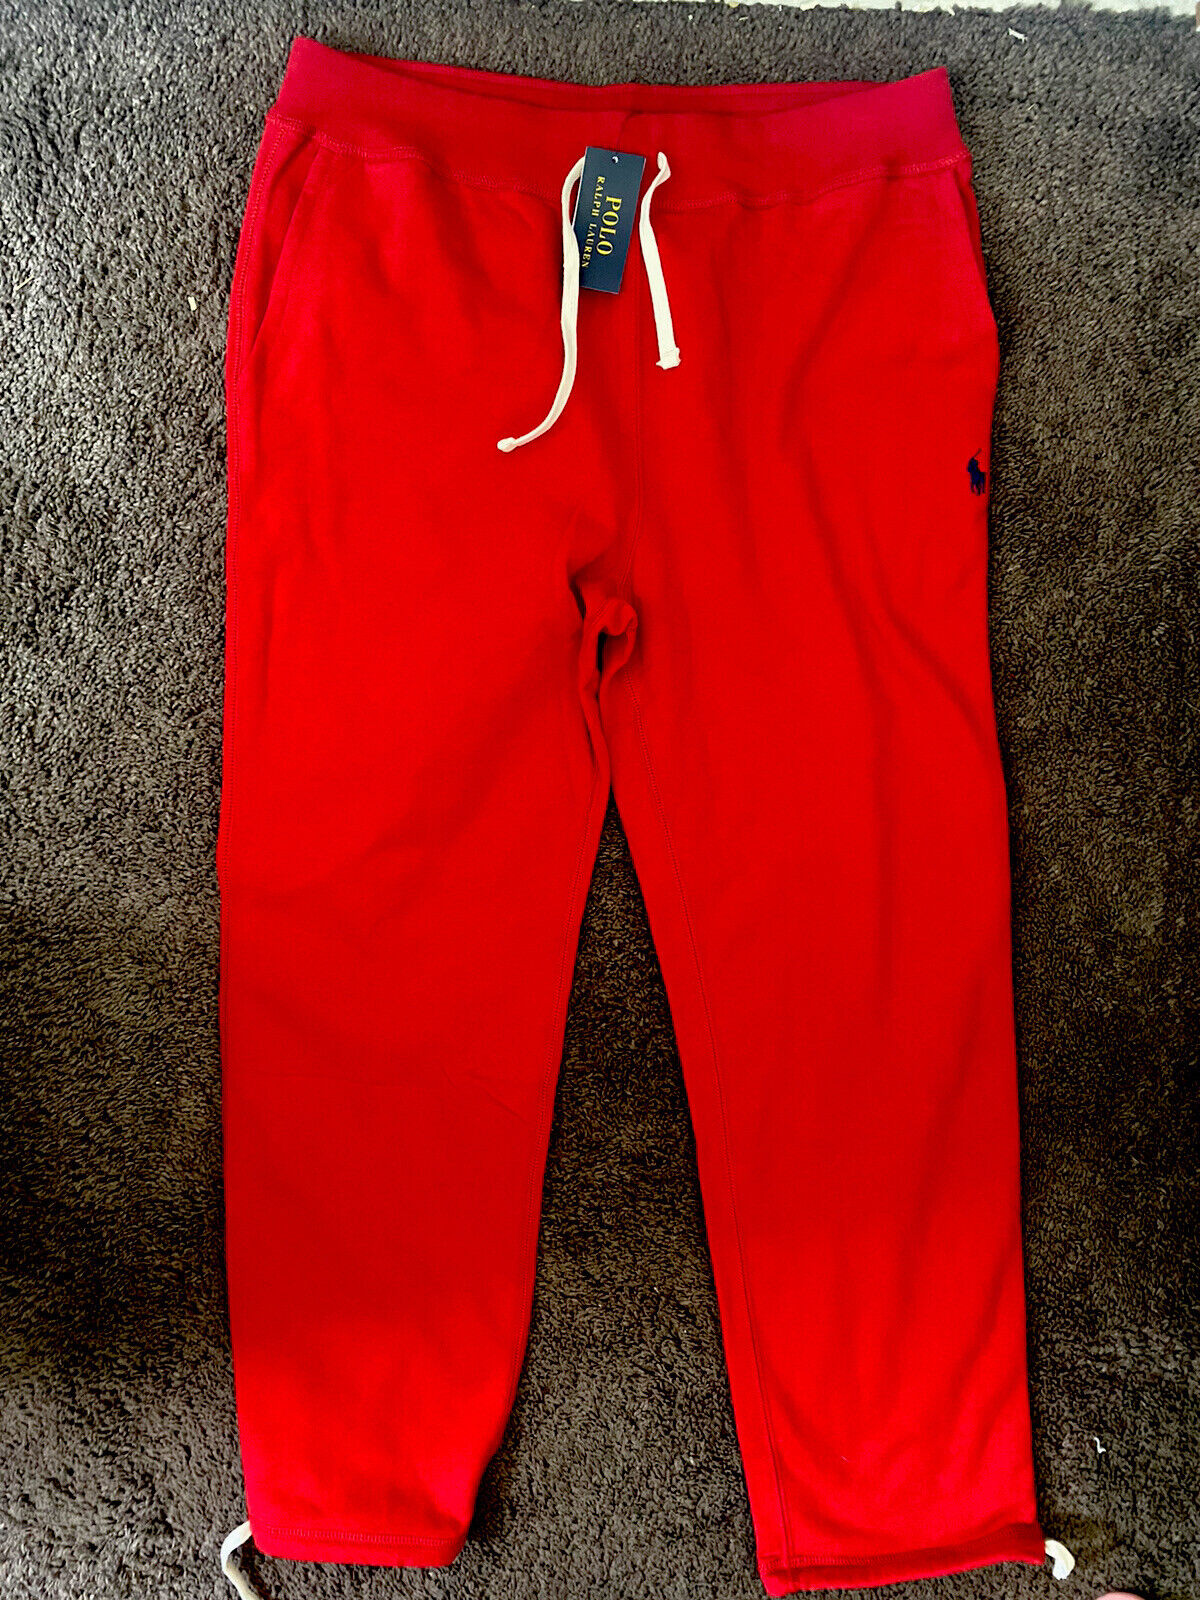 Polo Ralph Lauren Interlock Track Pants Joggers 2XL Red w/ Navy Pony RRL  RLX XXL 889043107248 | eBay